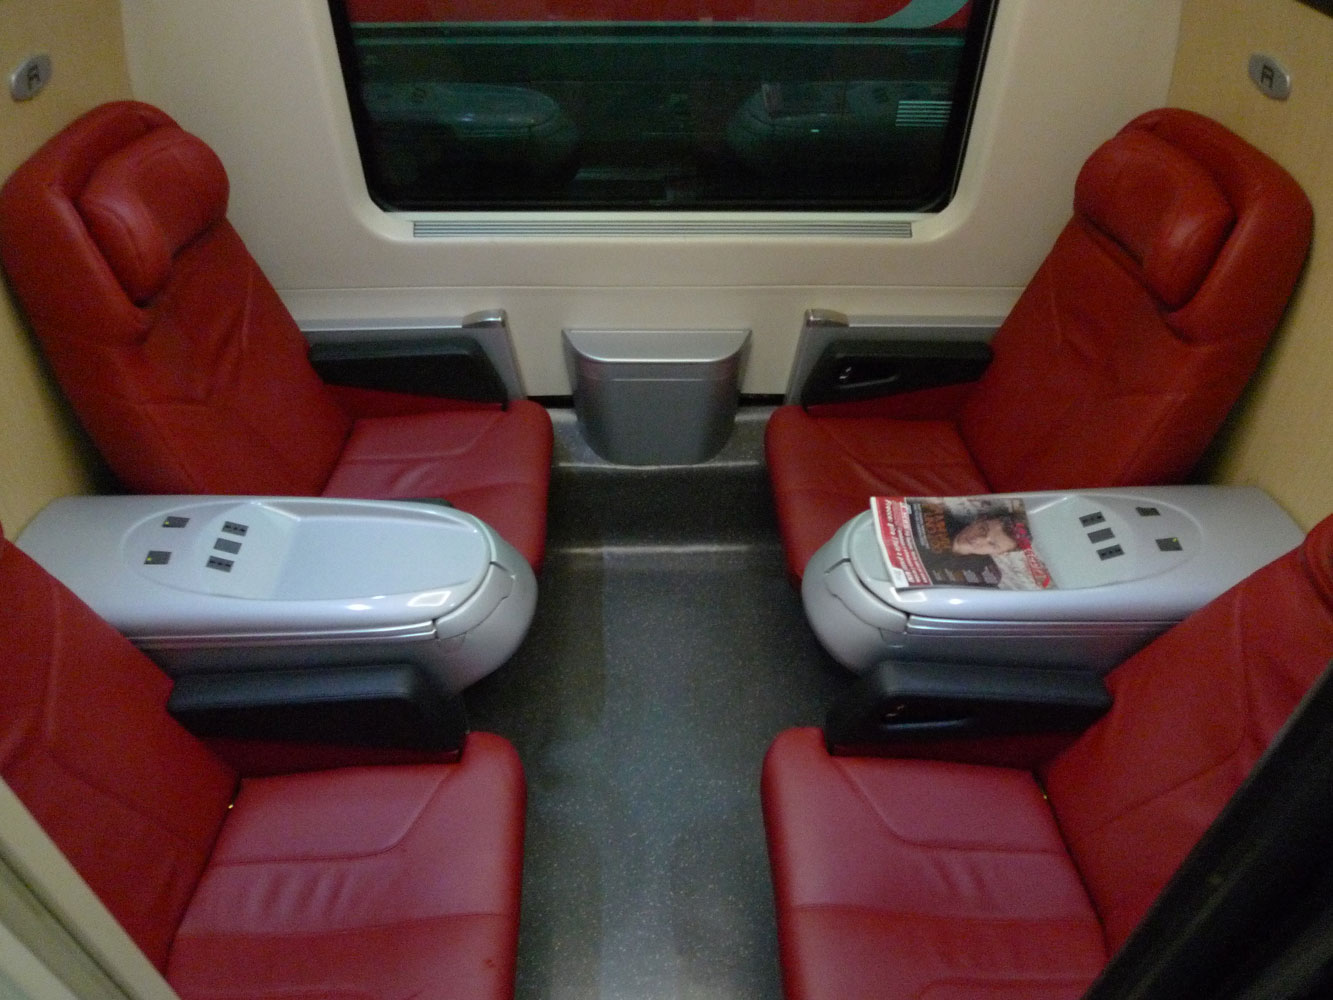 Trenitalia's Frecciarossa high-speed train | Tickets from €19.90